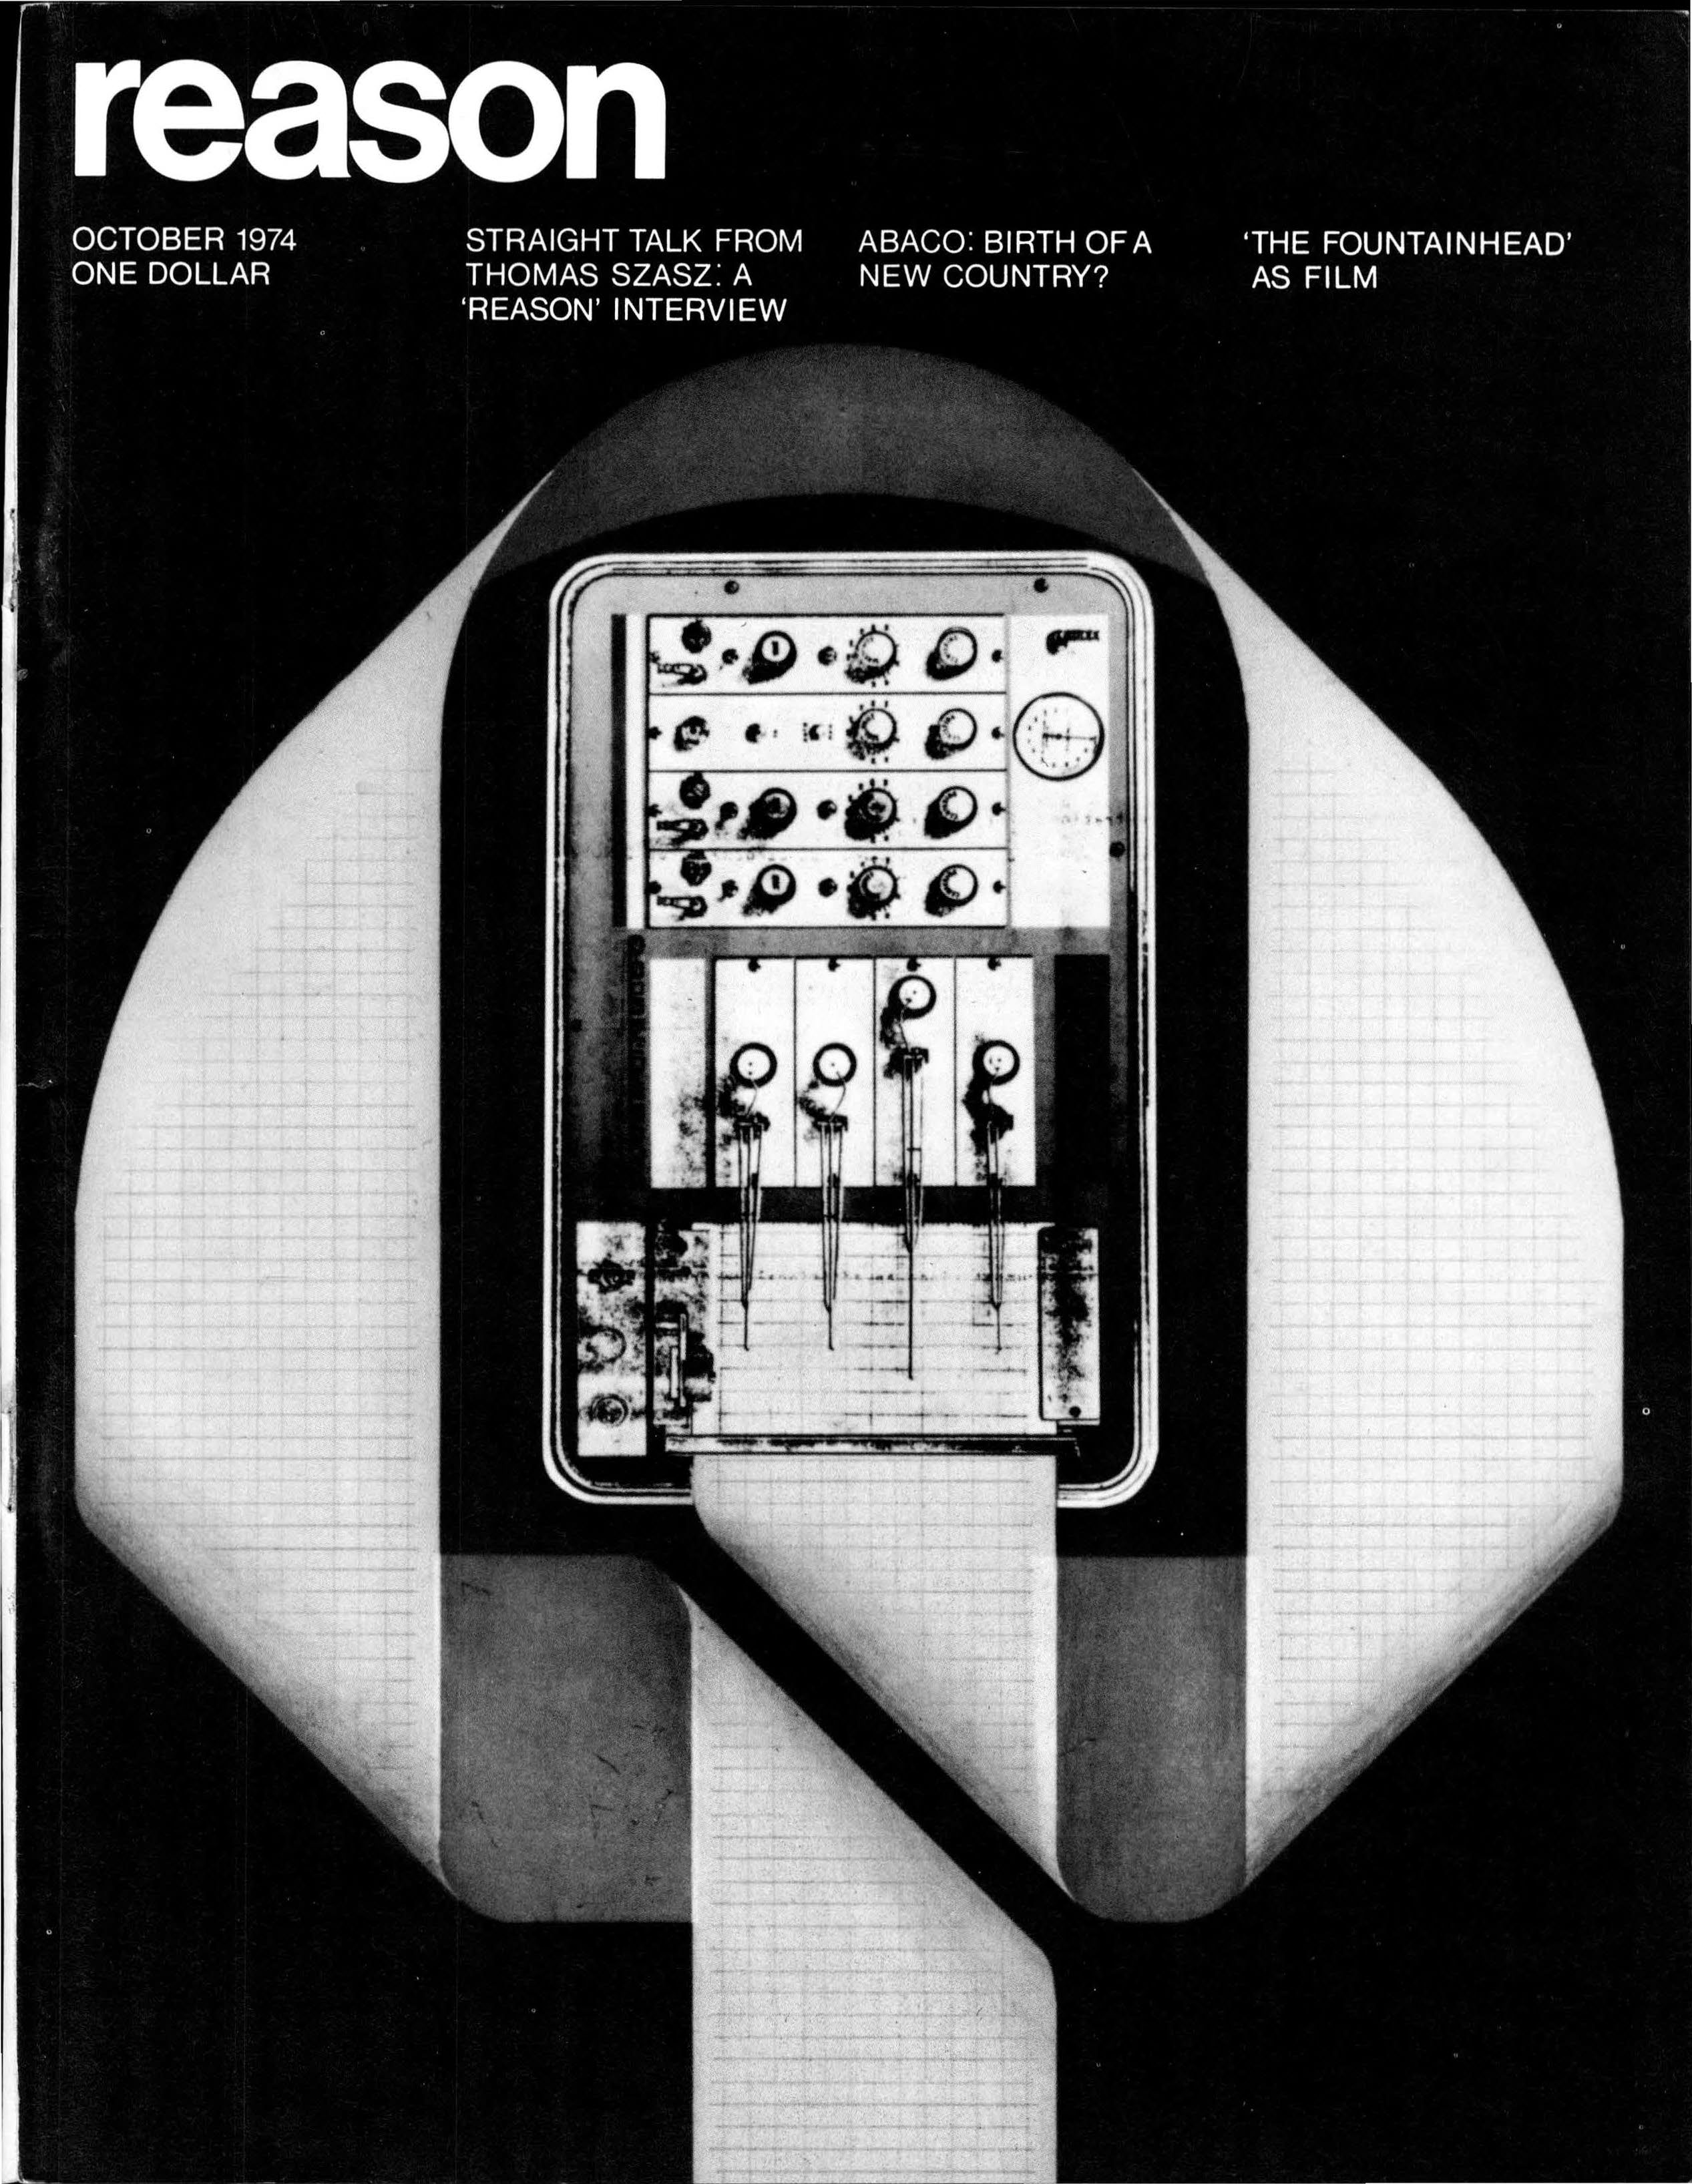 Reason magazine, October 1974 cover image